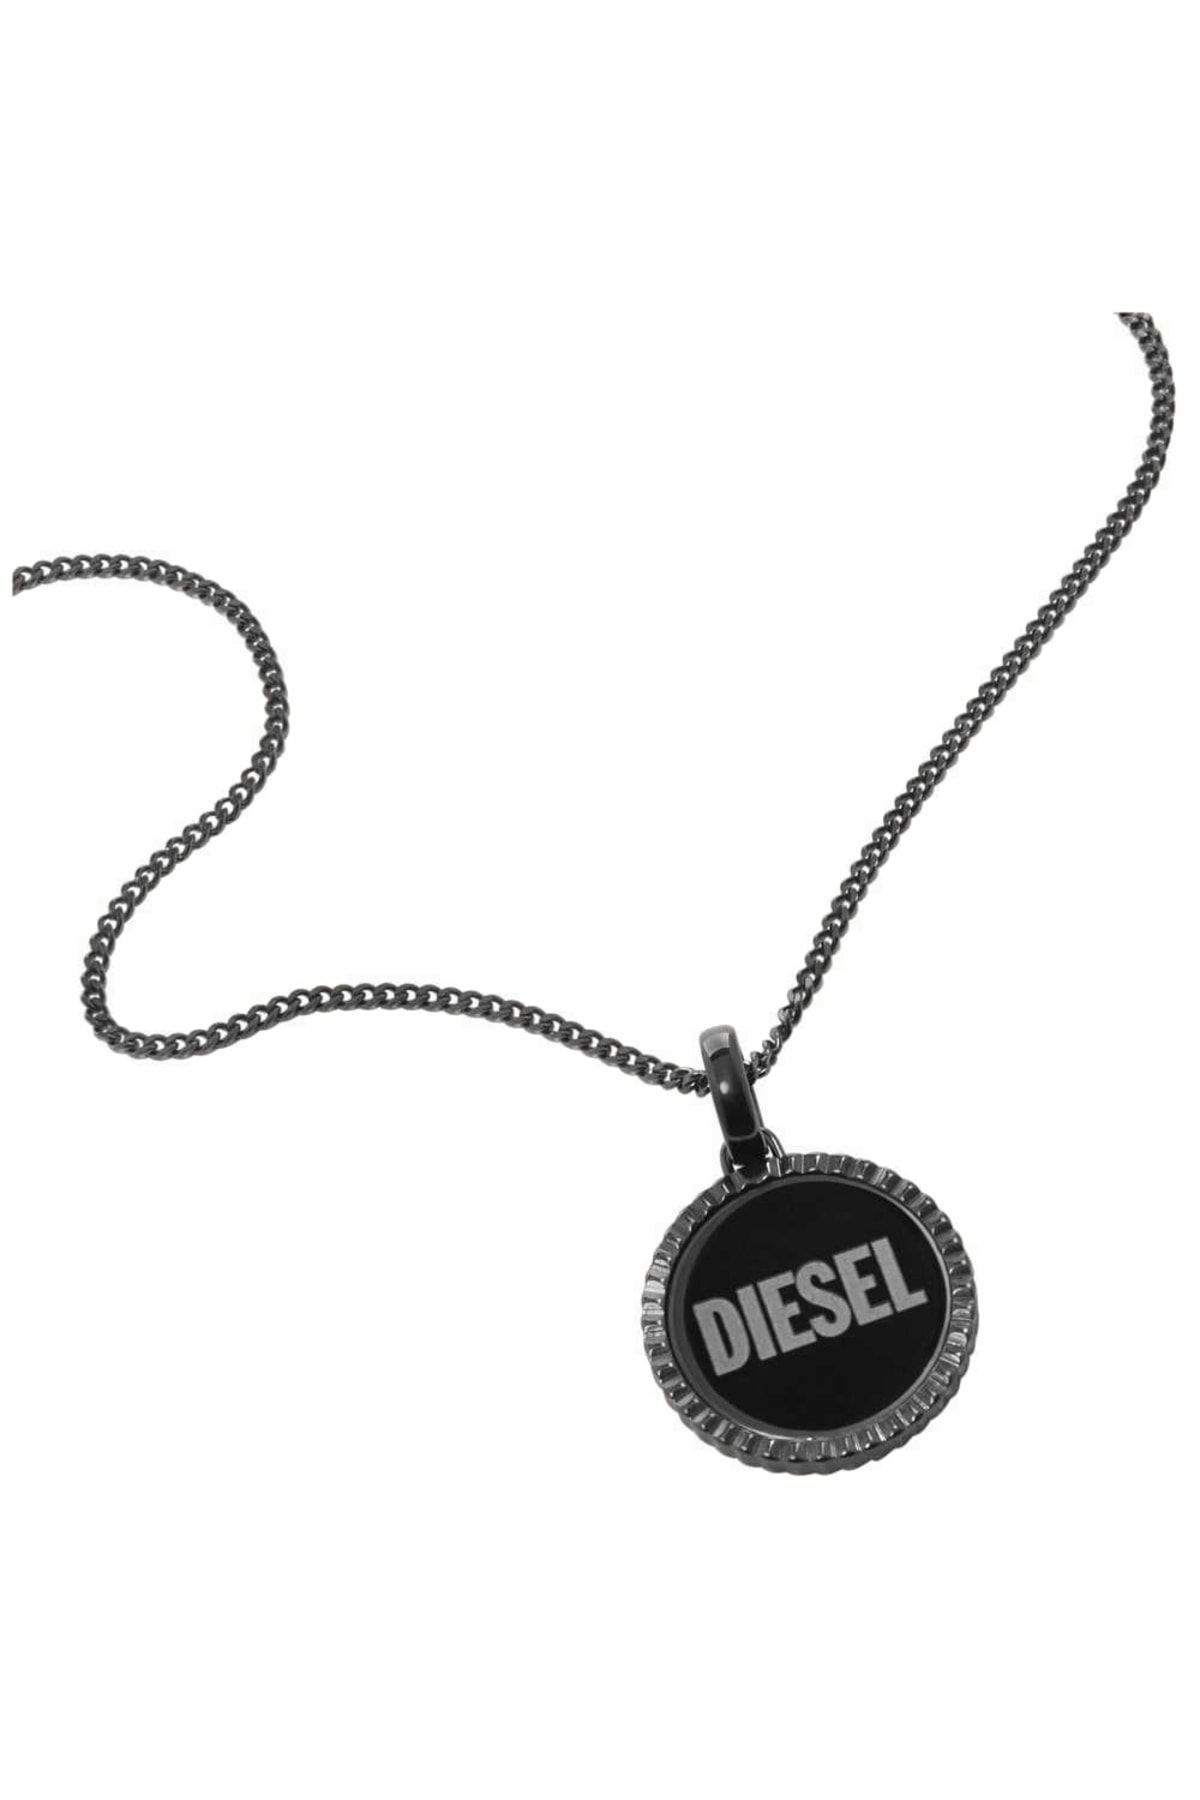 Diesel Djdx1362-060 Erkek Kolye